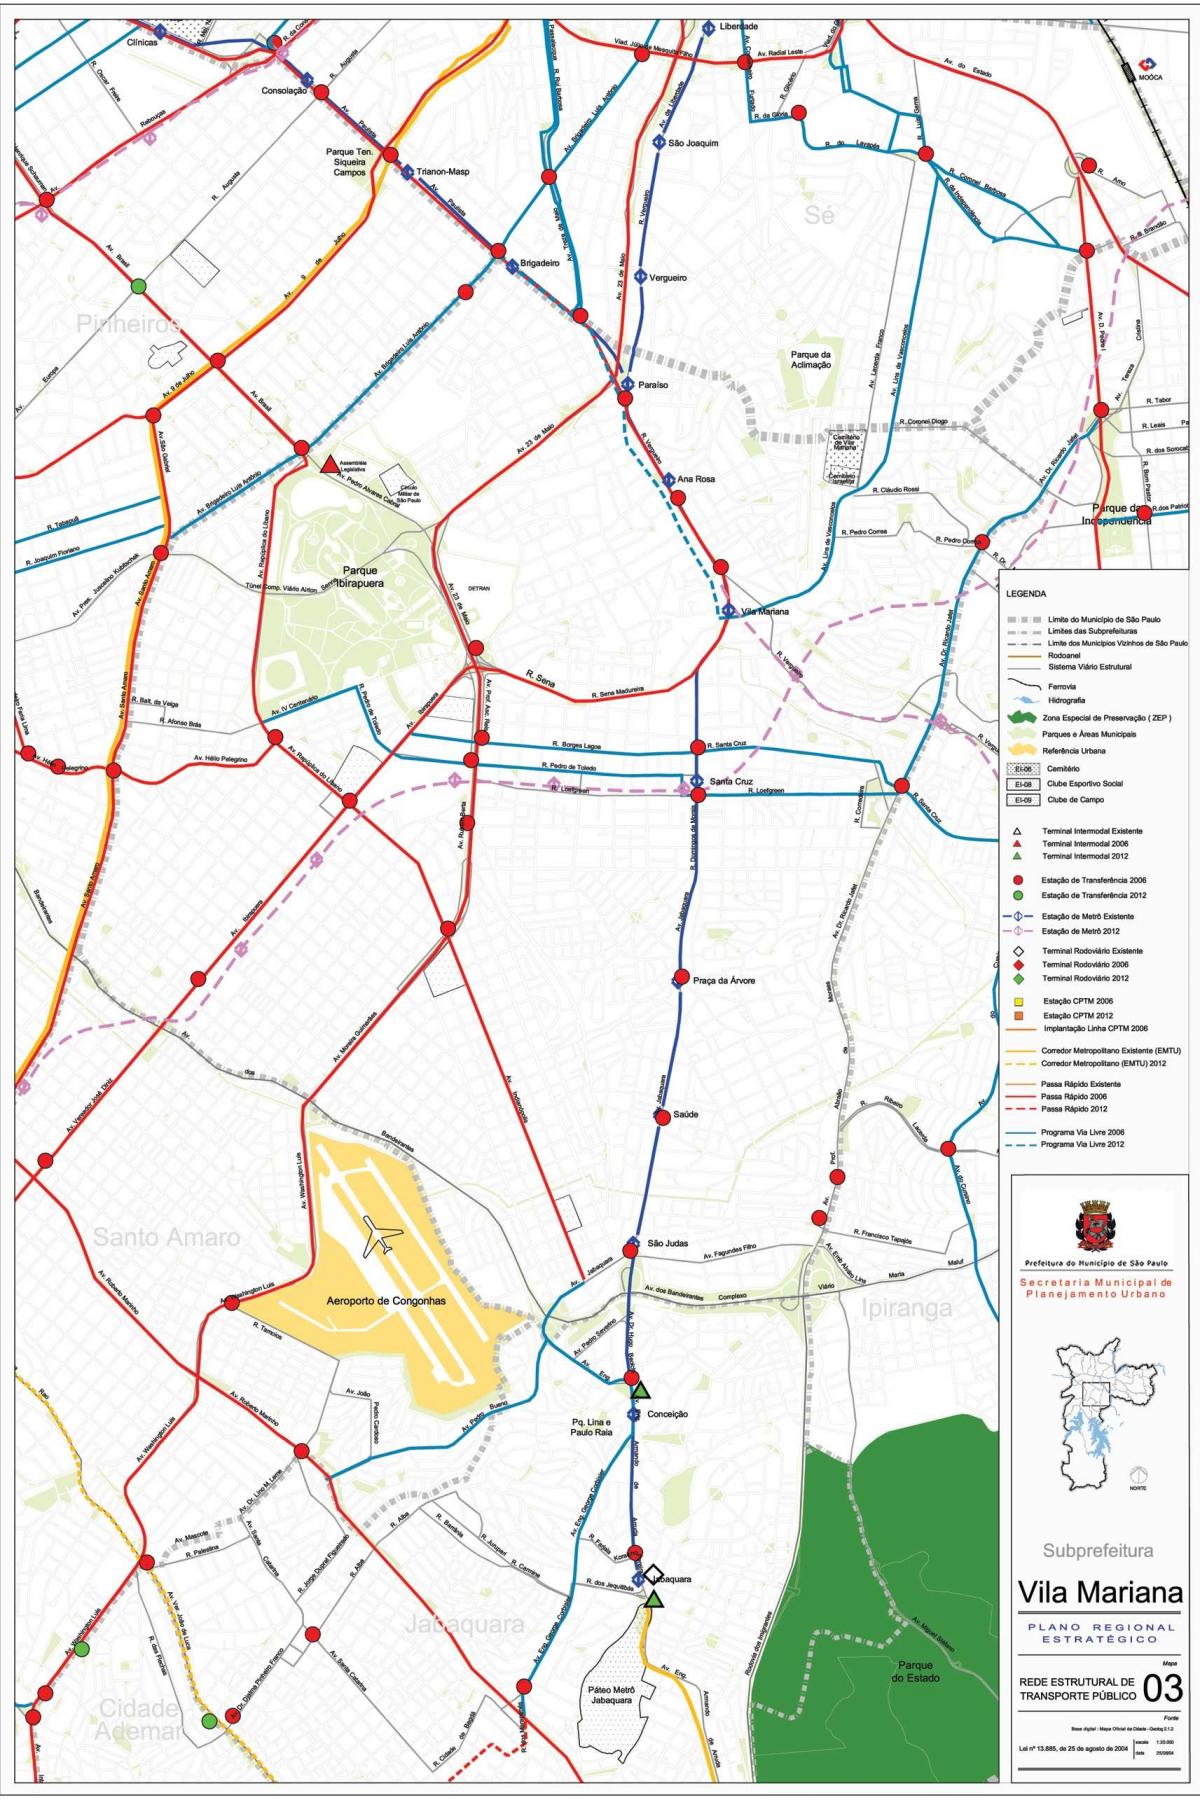 Vila Mariana, São Paulo haritası - Toplu taşıma